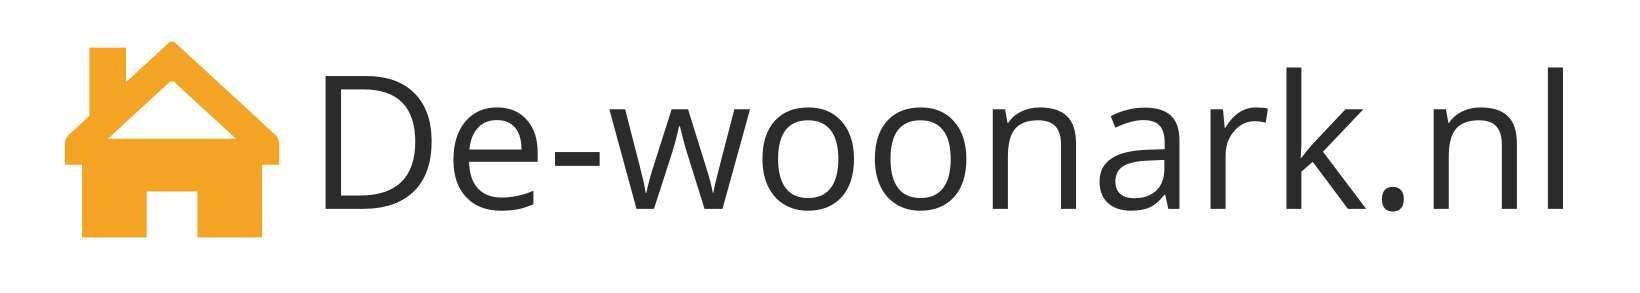 de-woonarknl-high-resolution-color-logo